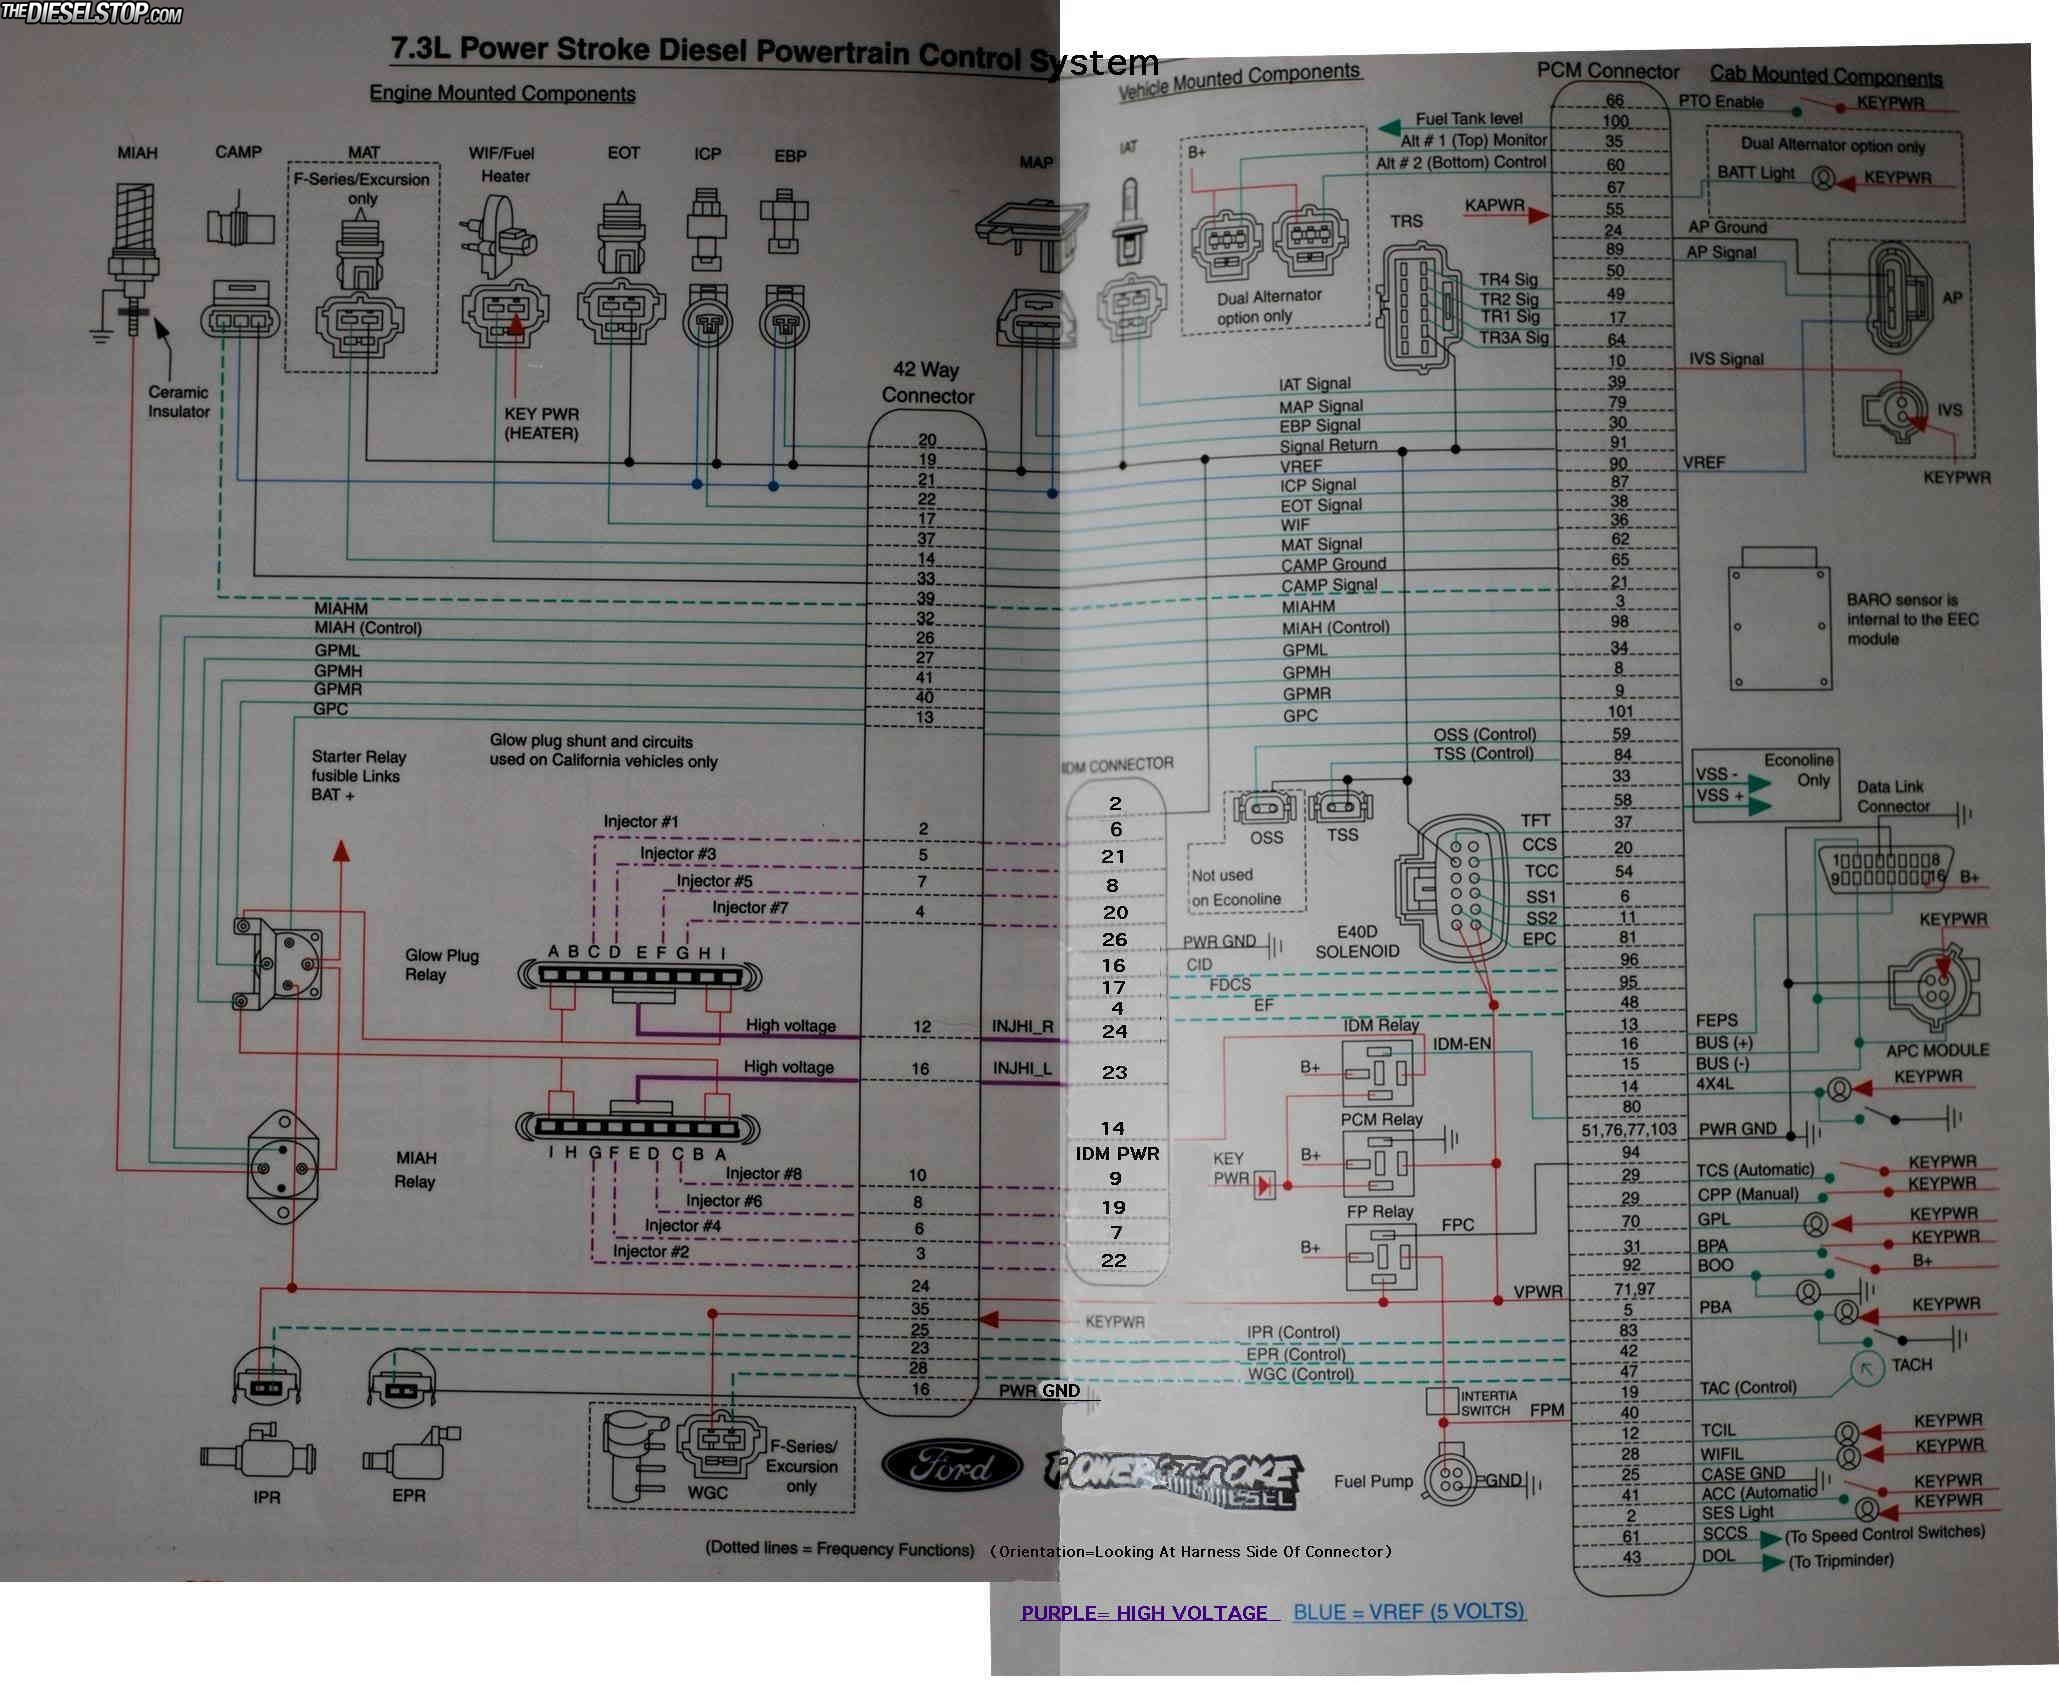 6 0 Powerstroke Engine Diagram 7 3l Wiring Schematic Printable Very Handy Diesel forum Of 6 0 Powerstroke Engine Diagram